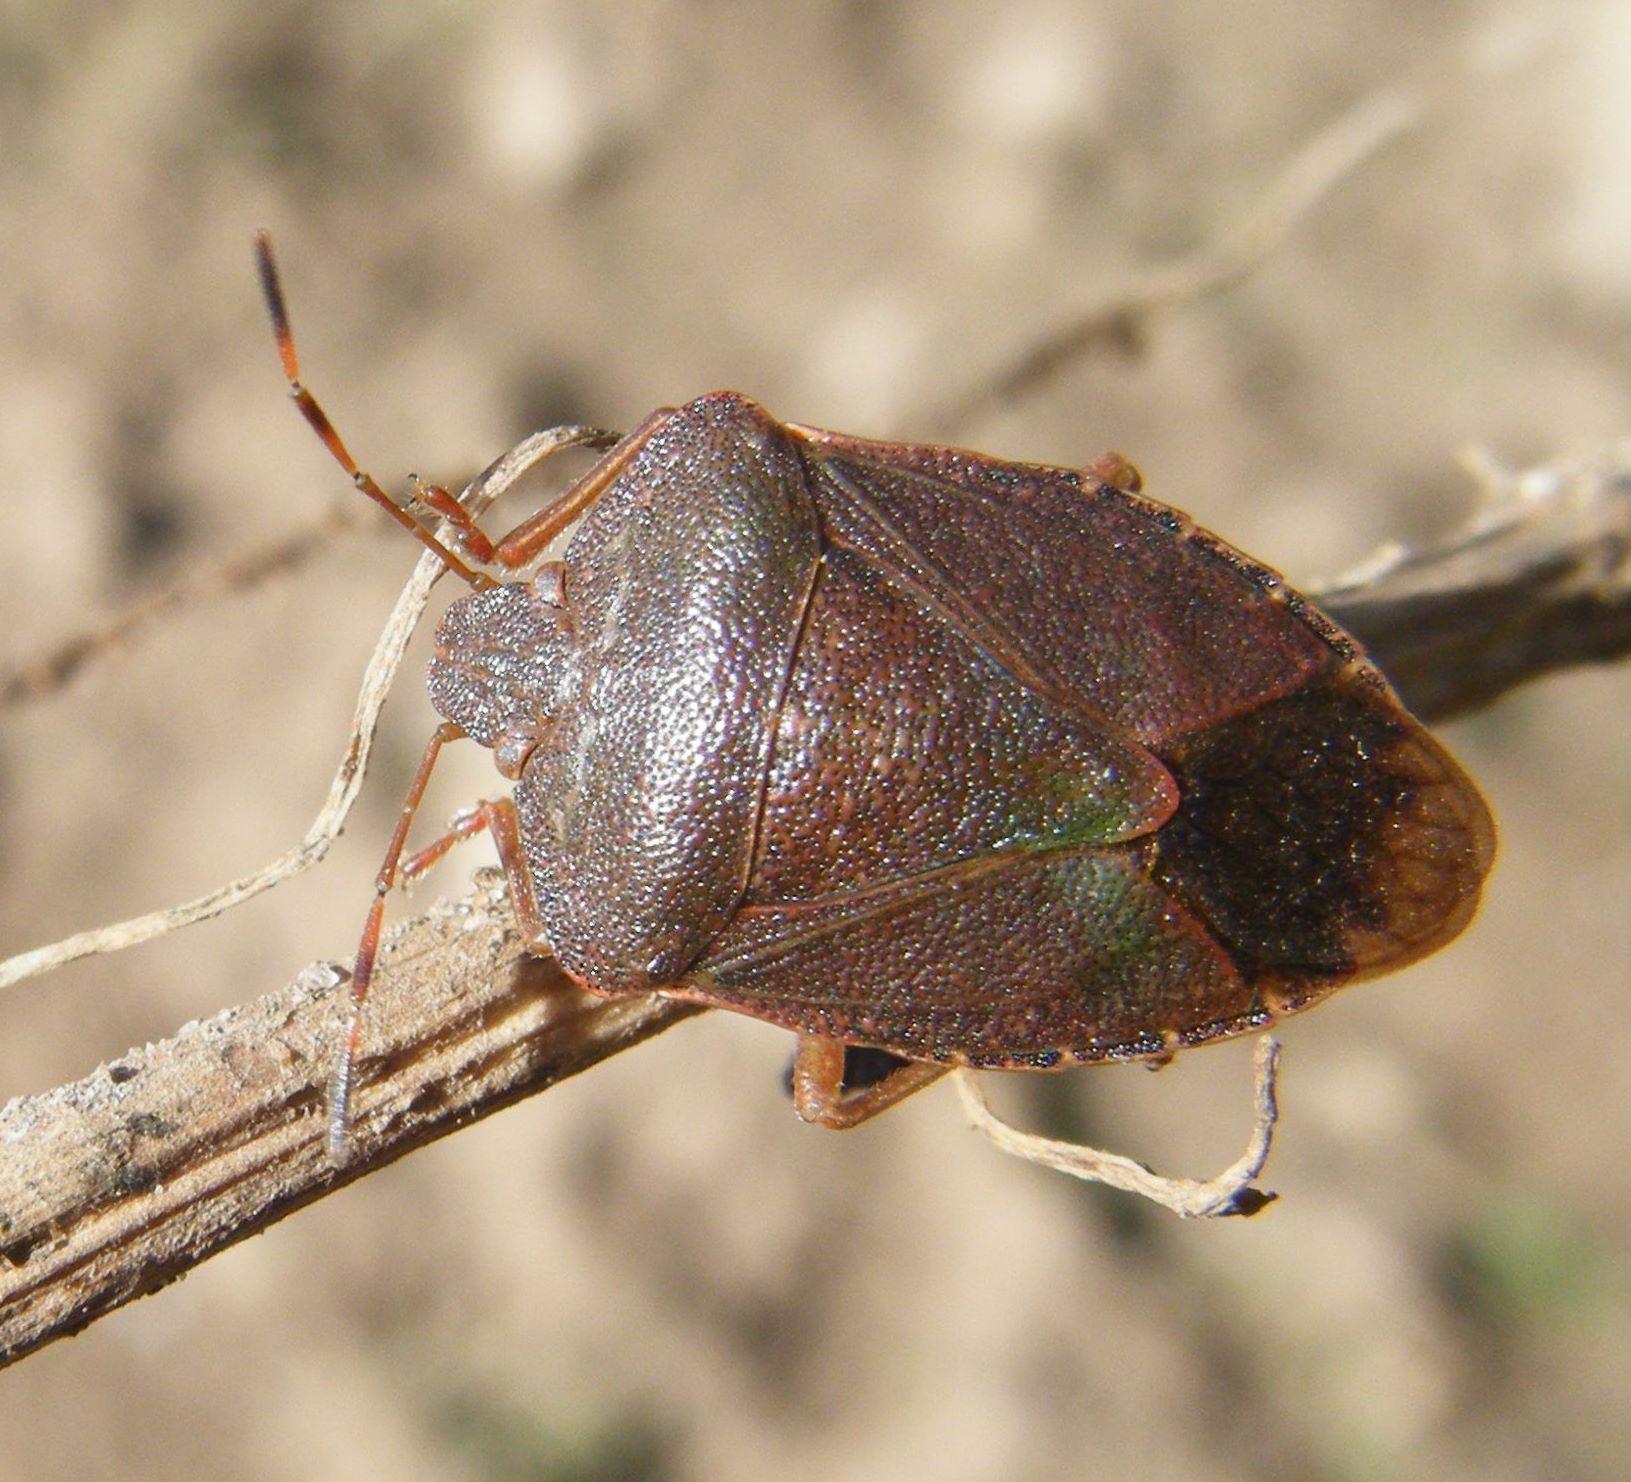 Green shield bug - Wikipedia